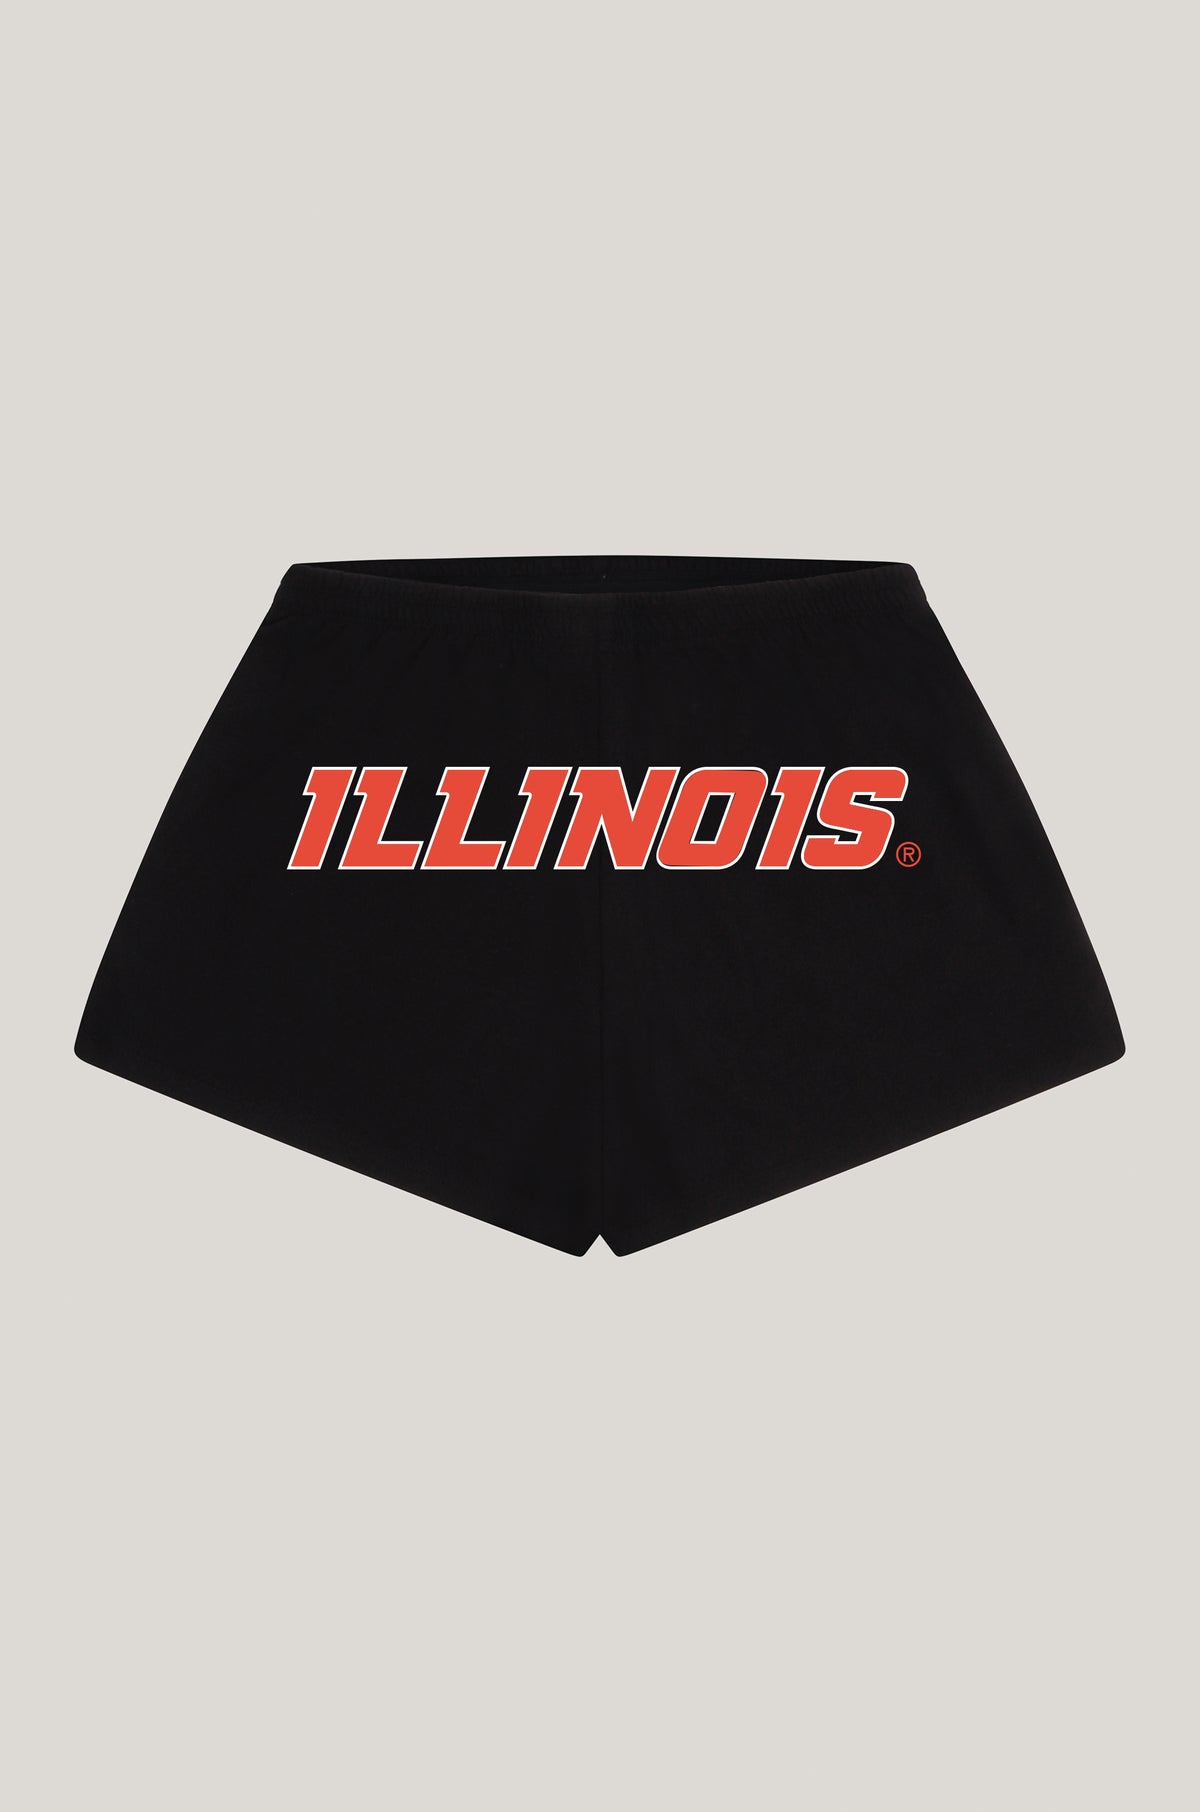 University of Illinois P.E. Shorts